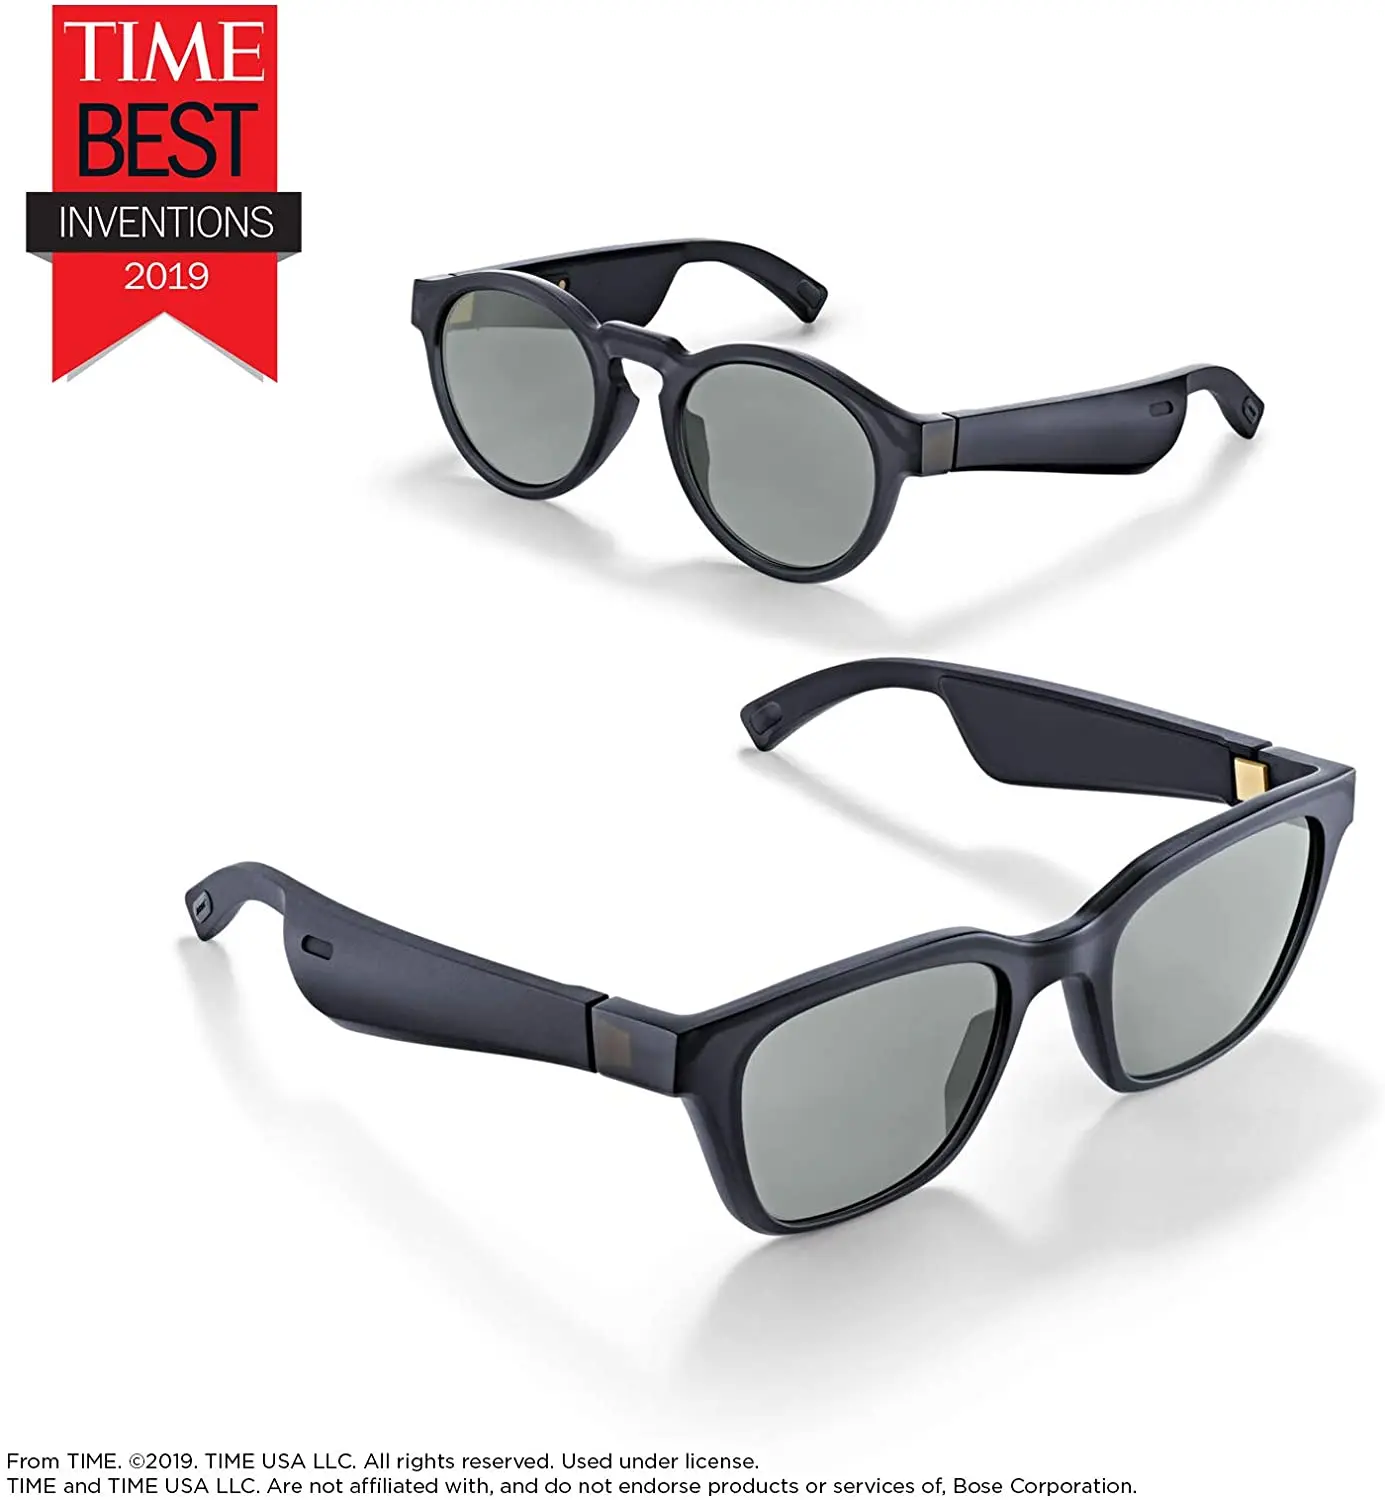 Bose Frames S/M size Audio Sunglasses 